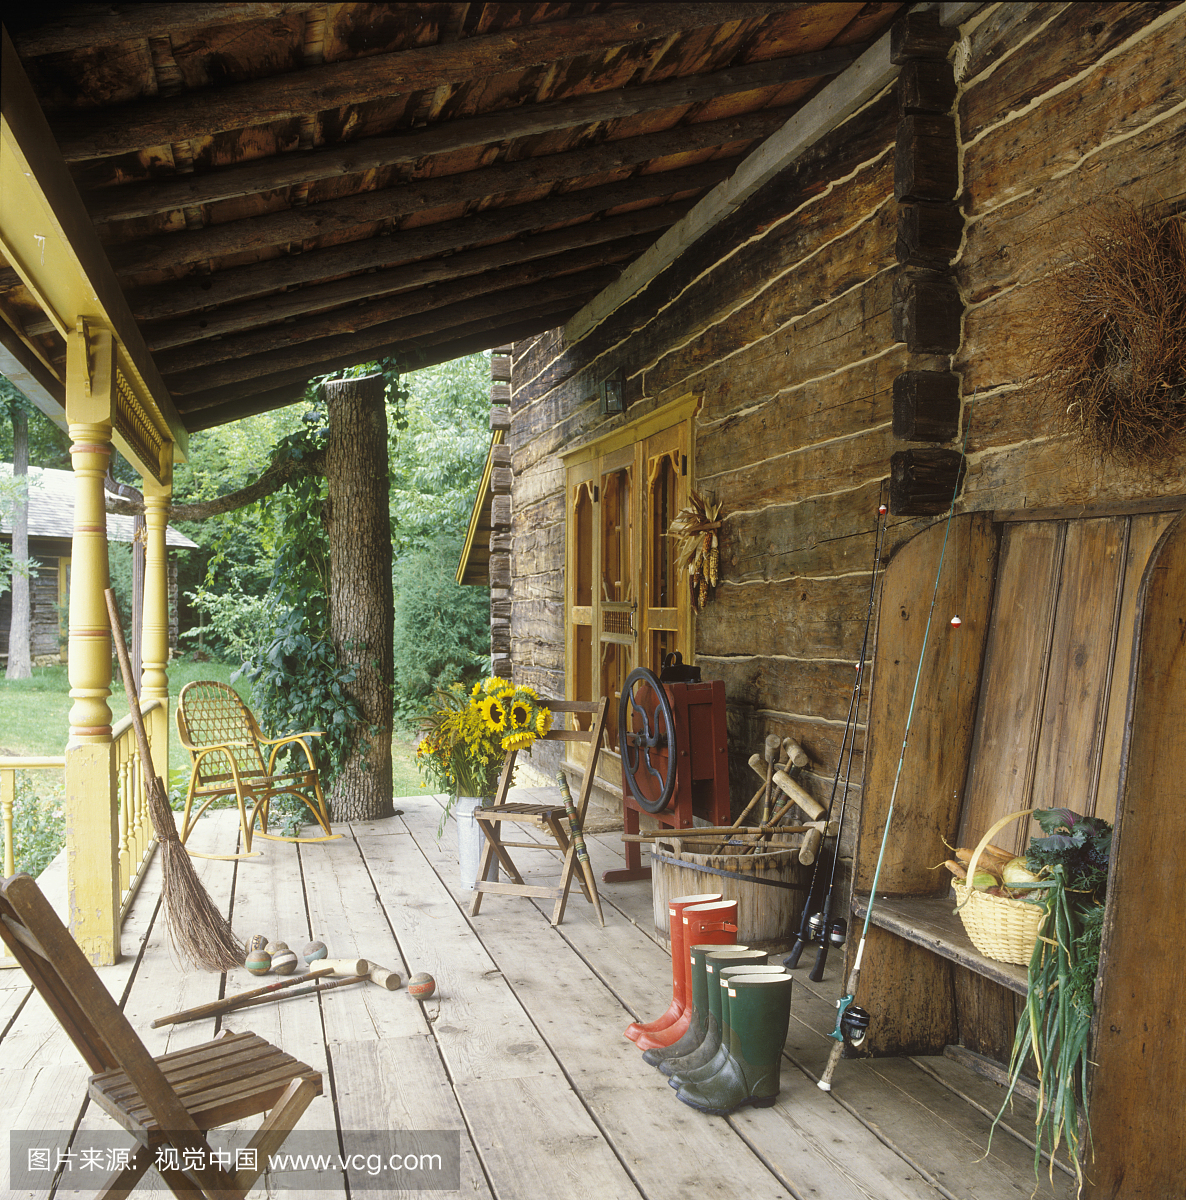 PORCHES - Log Farmhouse porch, wide plank